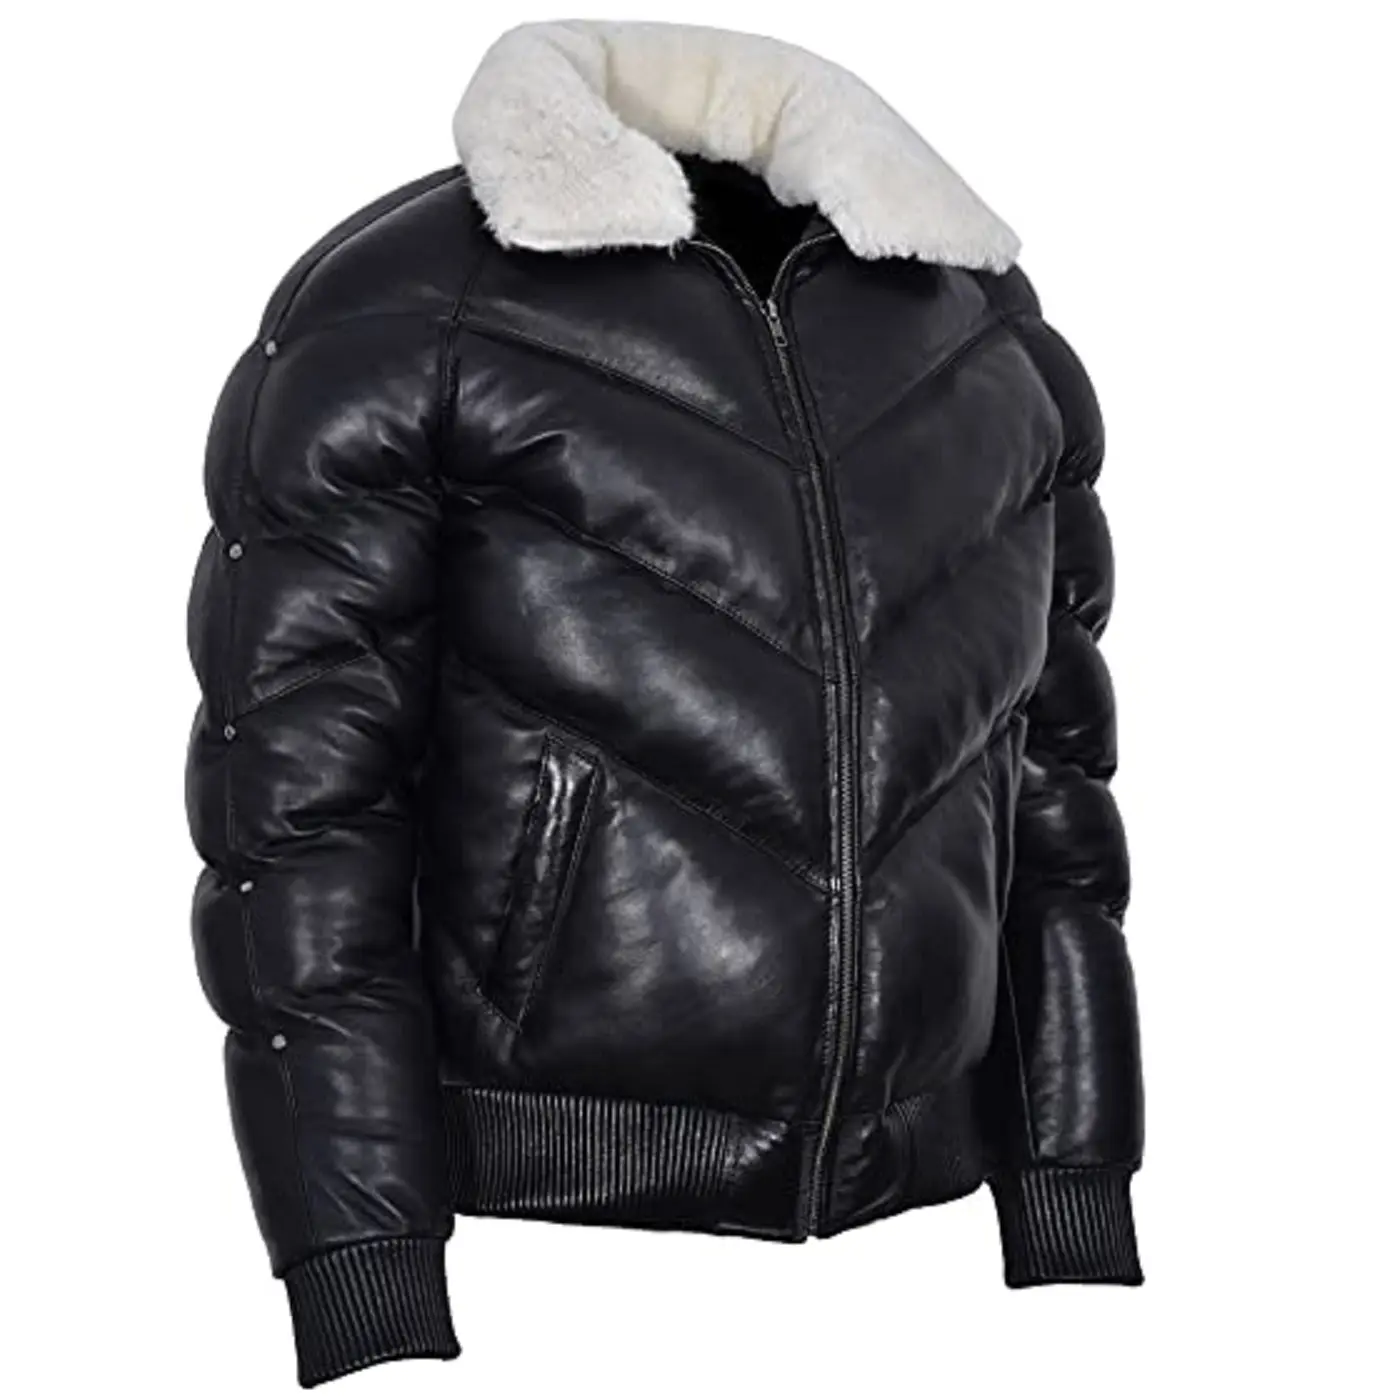 Men's Puffer Jacket Real Leather Black winter warm Real Sheep Fur collar bomber pilot aviator leather jacket